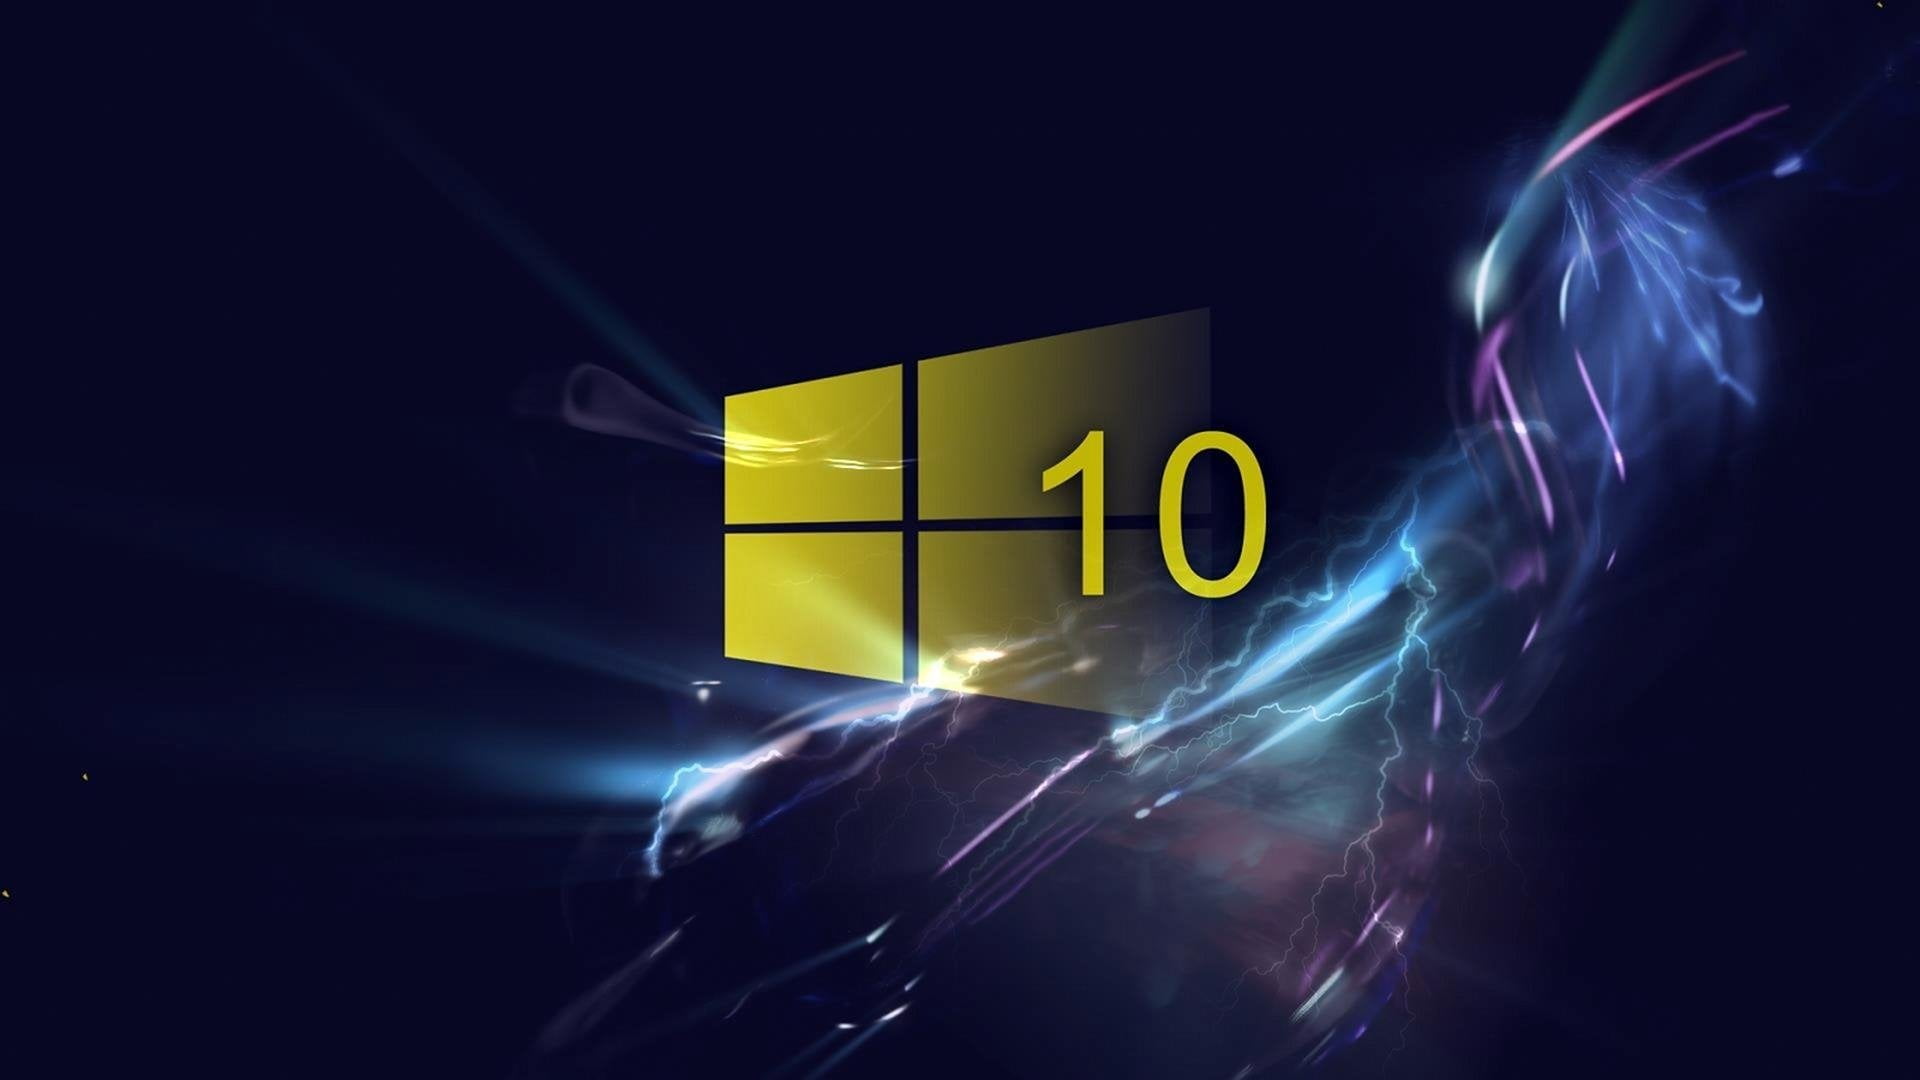 Windows 10, night, illuminated, motion, light - natural phenomenon